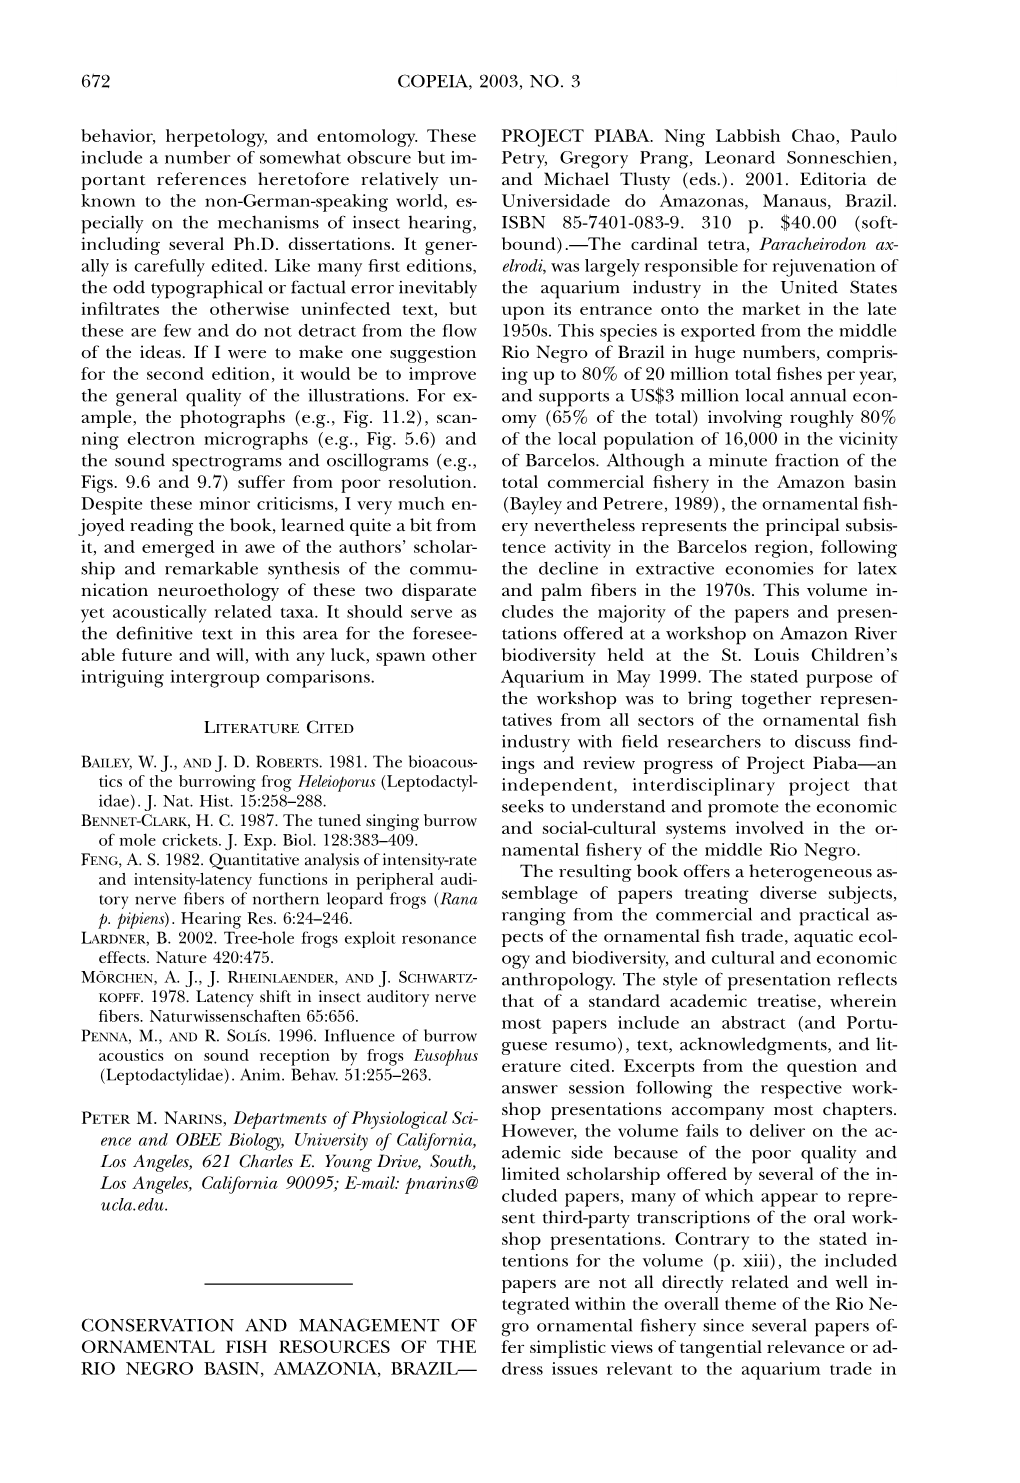 672 COPEIA, 2003, NO. 3 Behavior, Herpetology, and Entomology